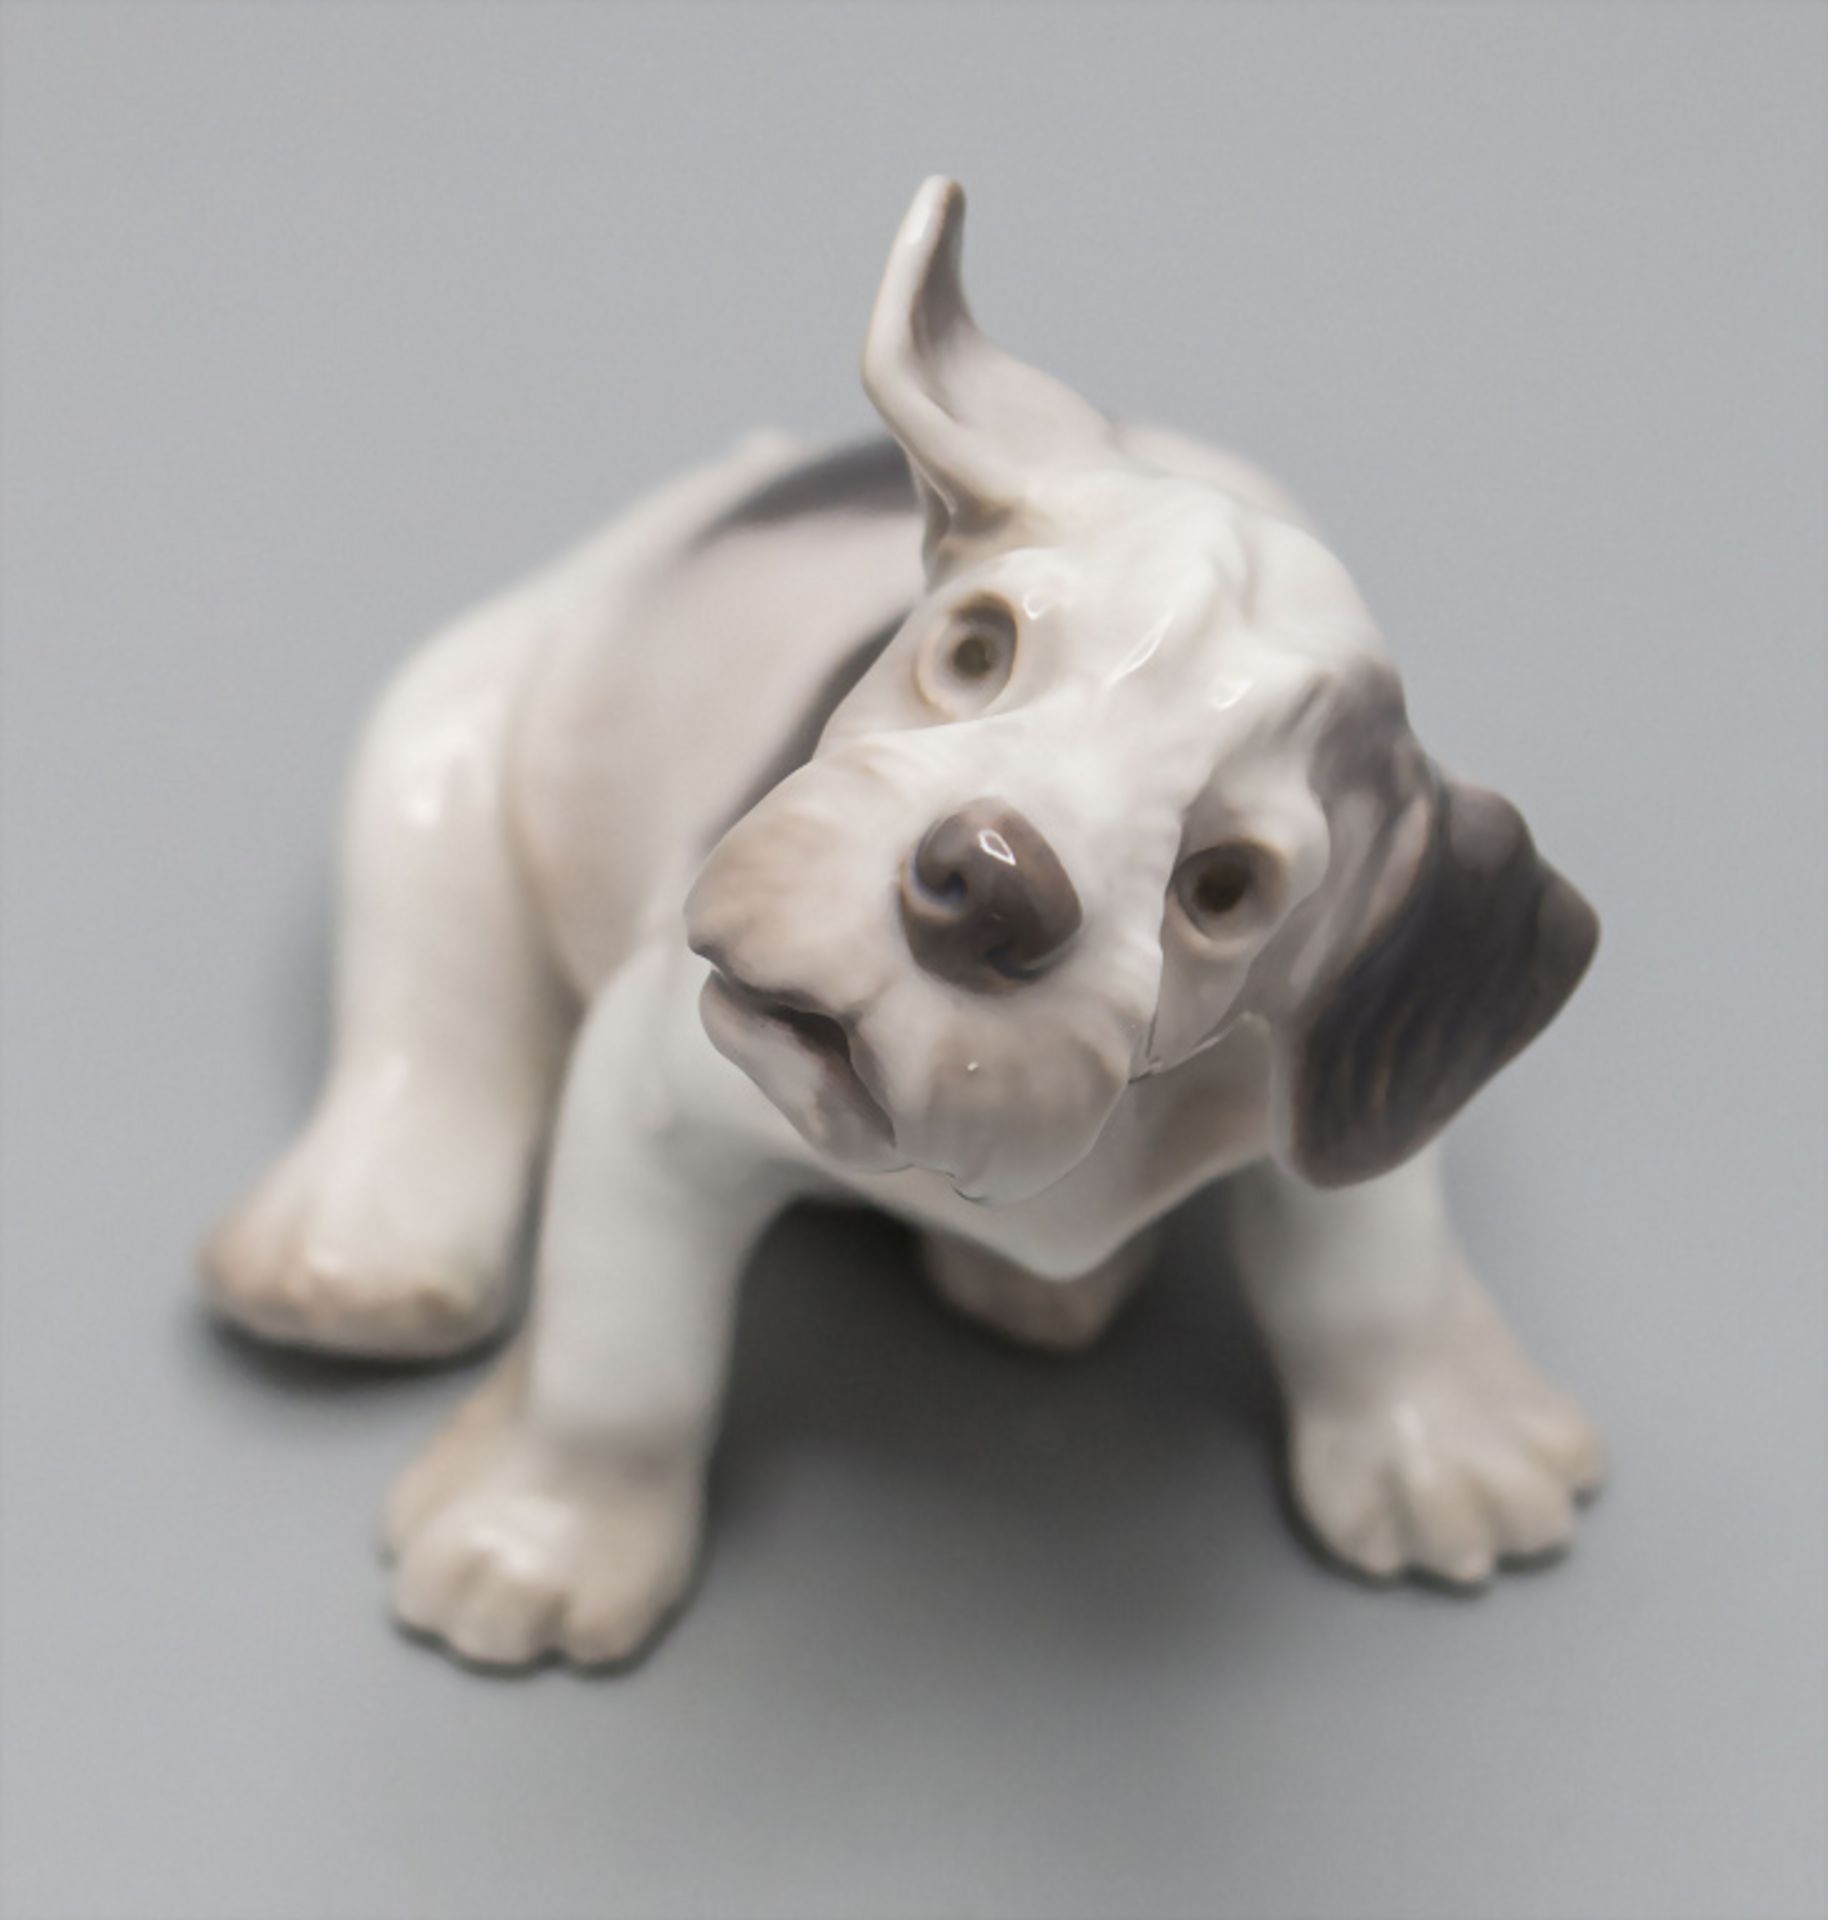 Sealyham Terrier Welpe / A Sealyham puppy, Bing & Gröndahl, Kopenhagen, 20. Jh.